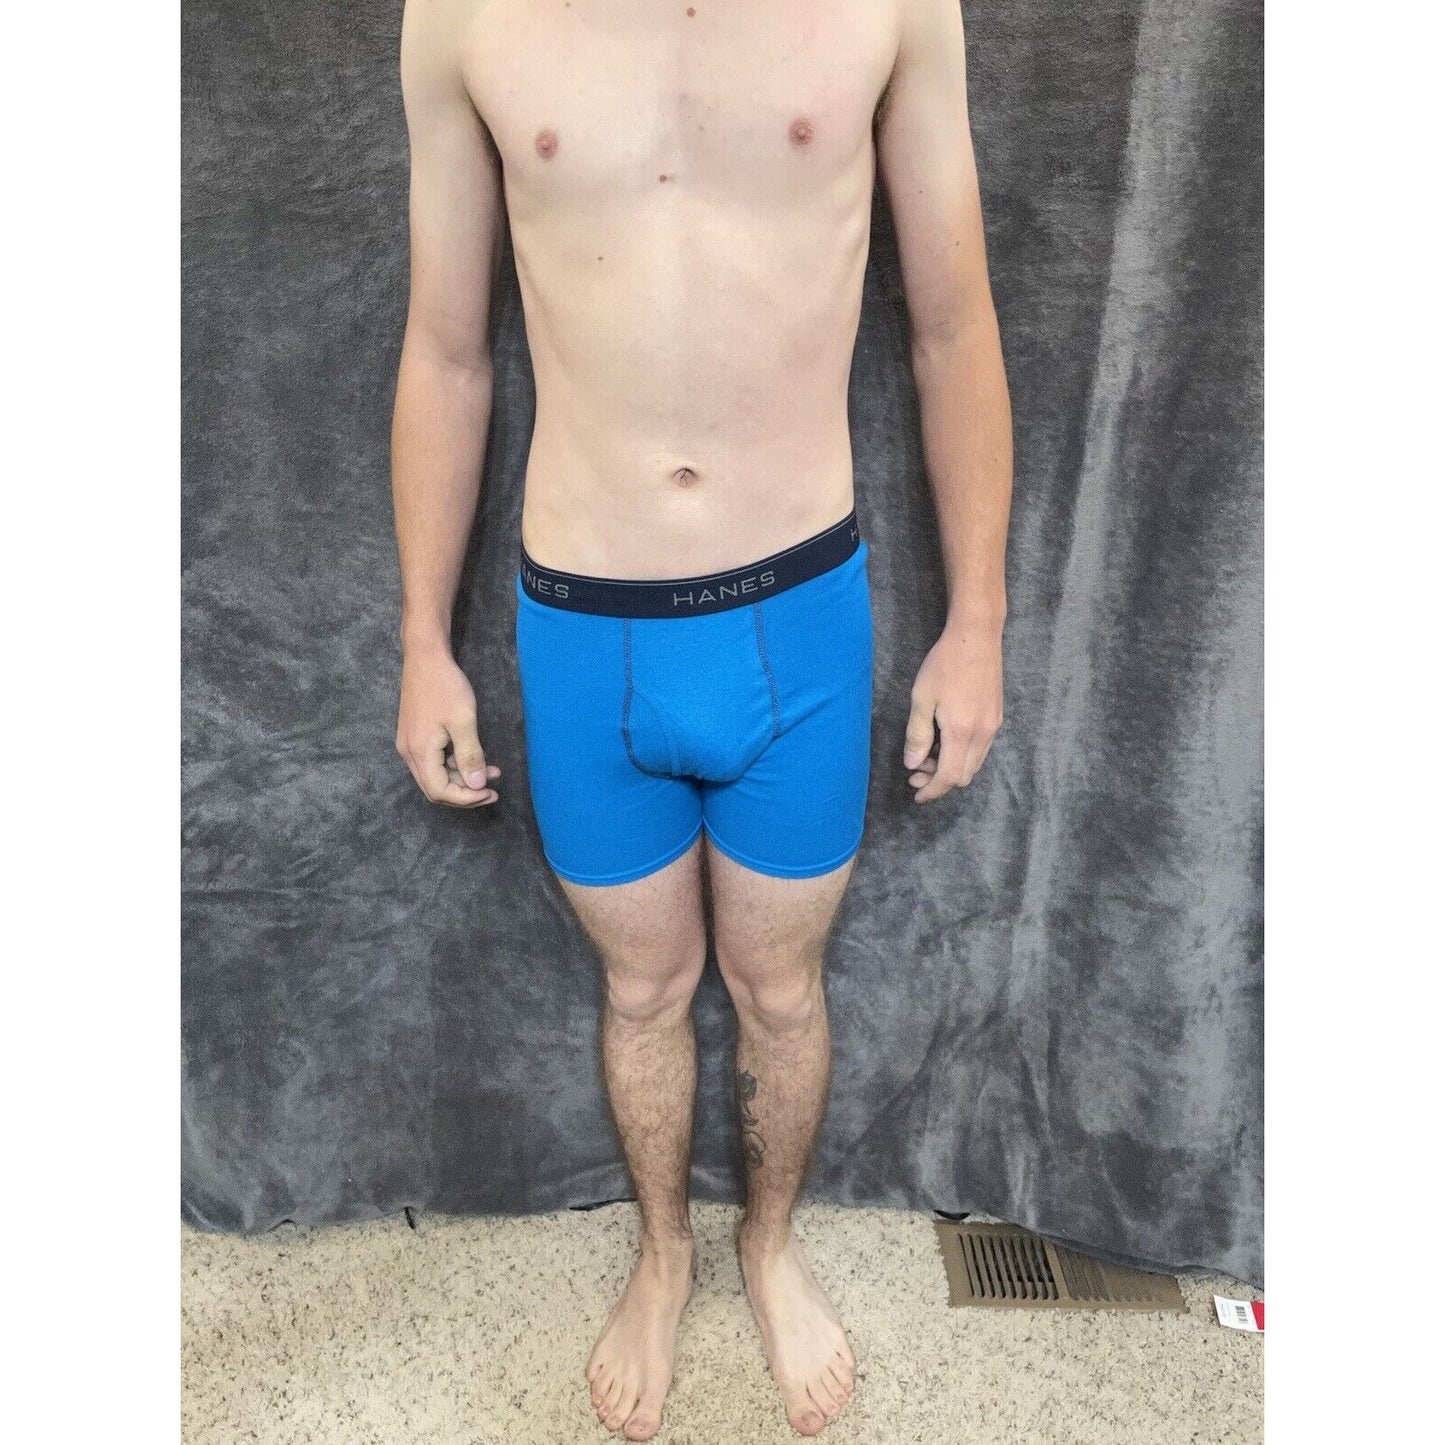 boy's Hanes youth XL Aqua With Dark Blue boxer brief